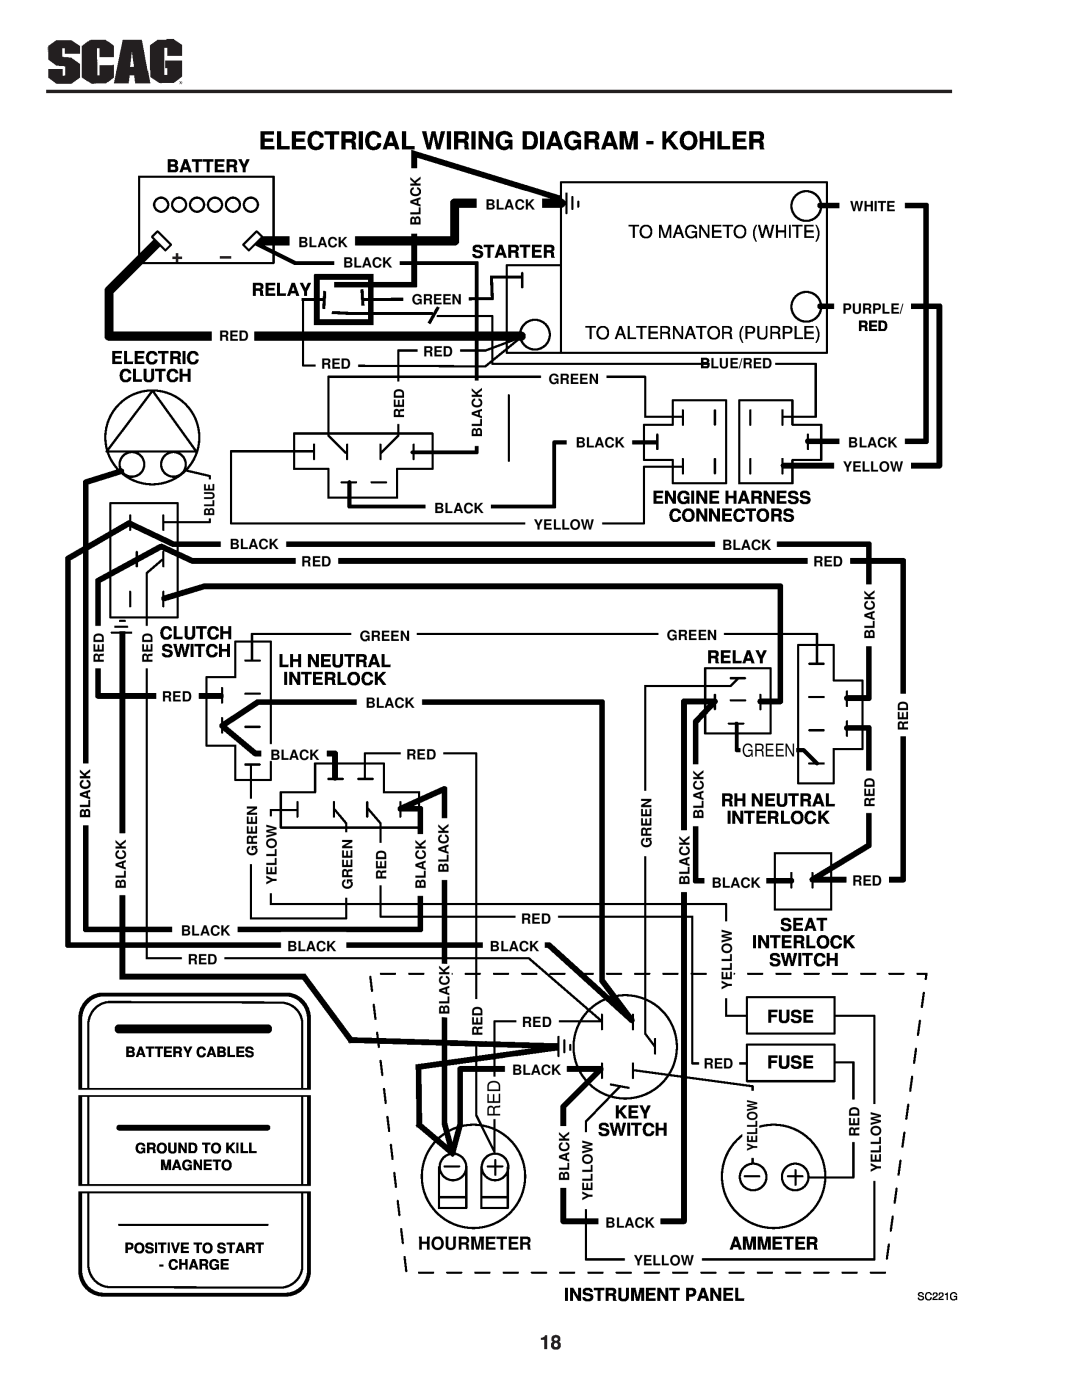 Scag Power Equipment SSZ operating instructions Electrical Wiring Diagram - Kohler 